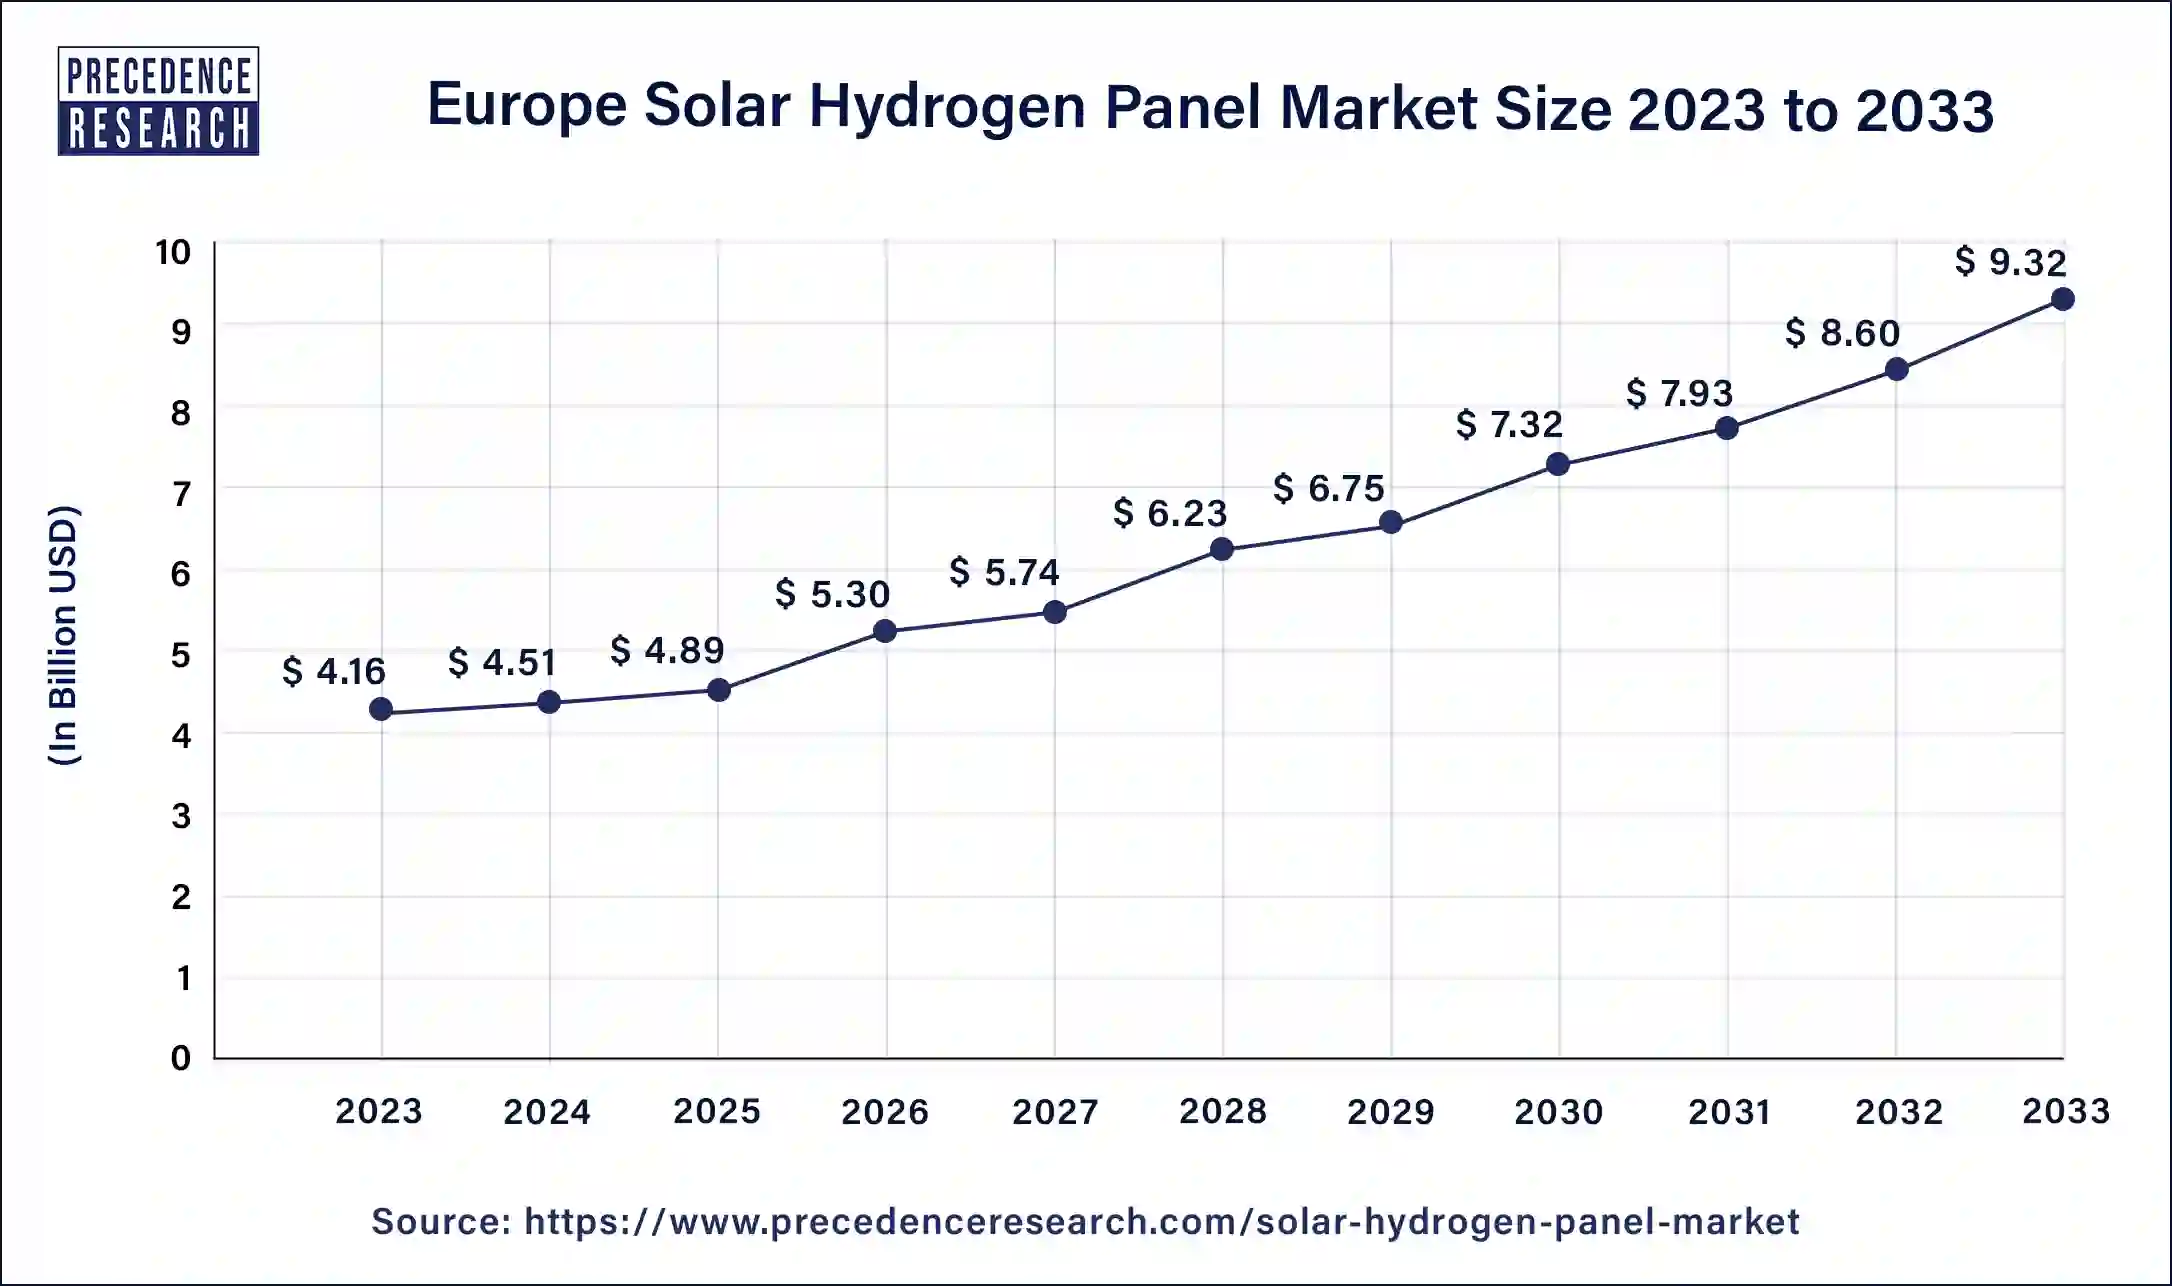 Europe Solar Hydrogen Panel Market Size 2024 to 2033